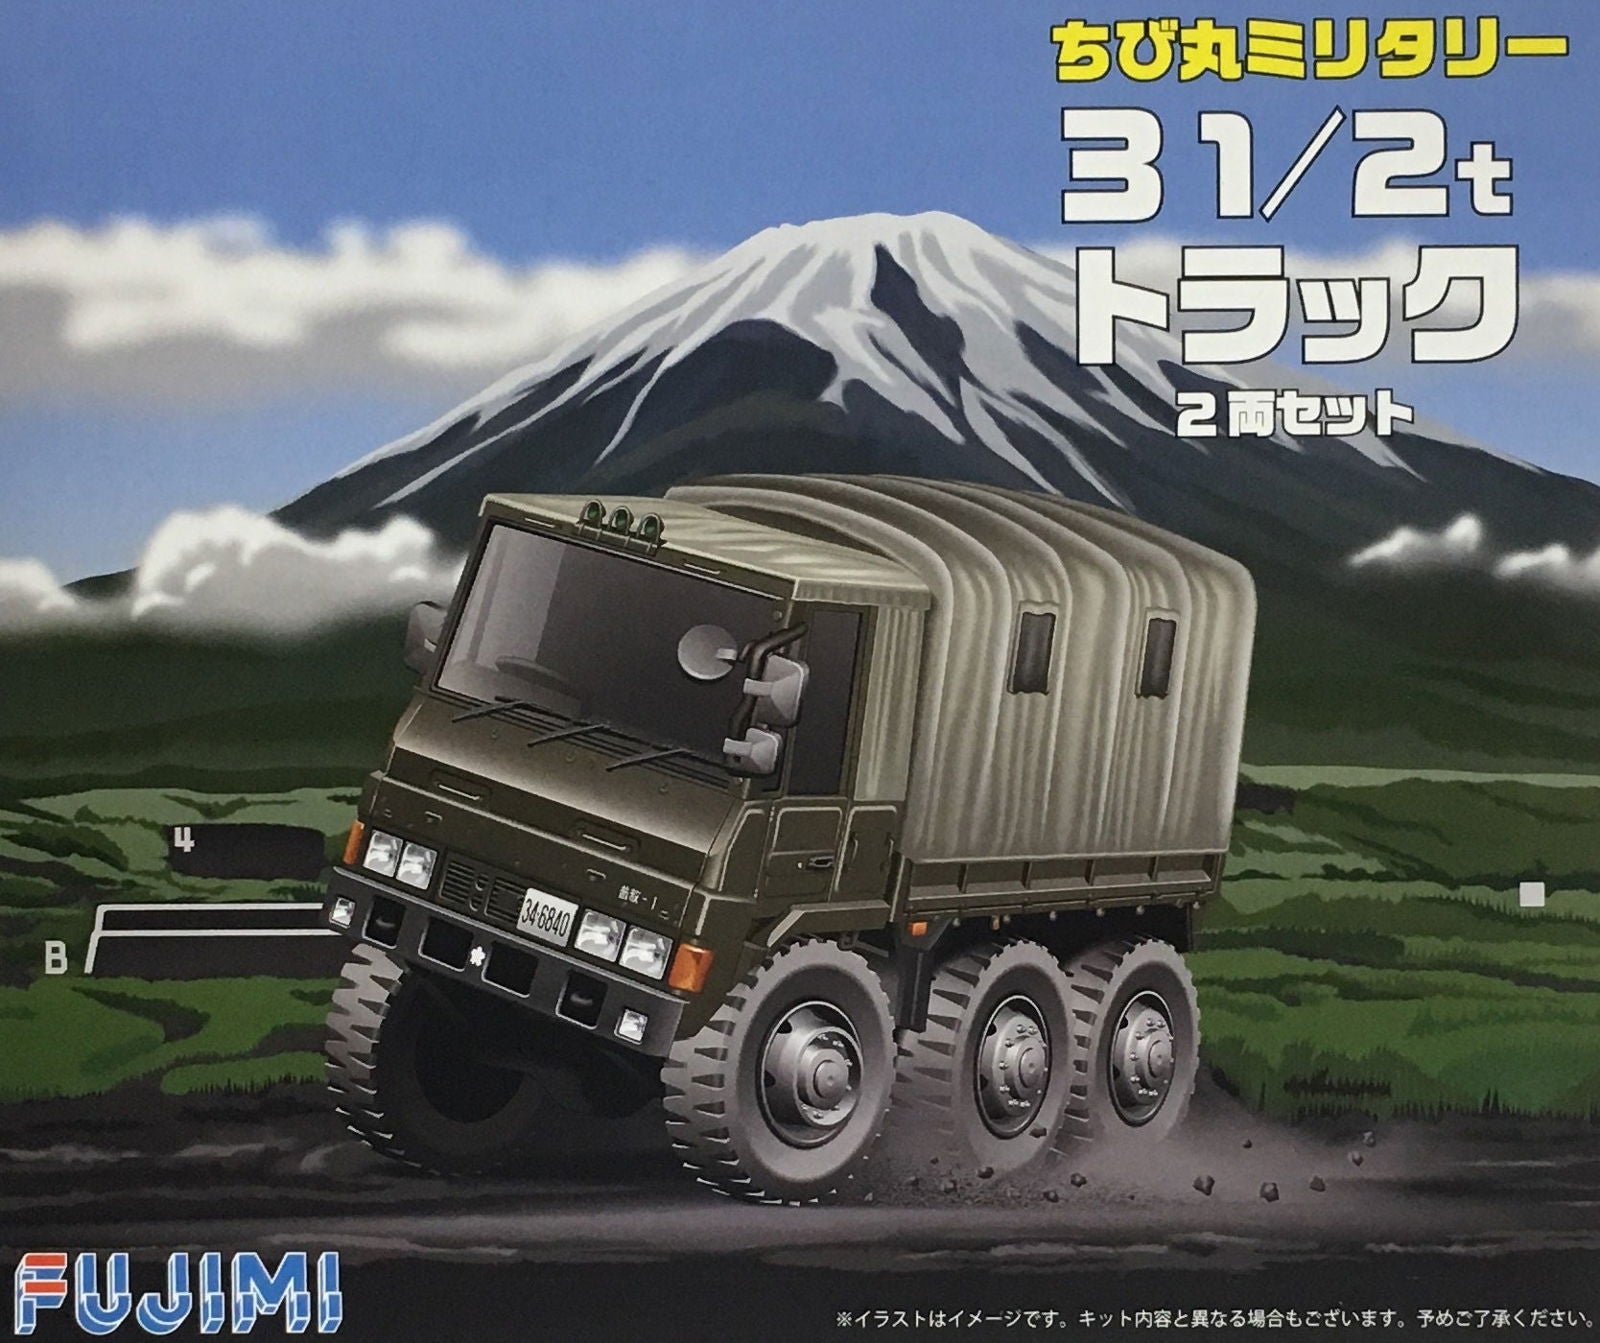 Fujimi TM3 Chibimaru 3 1/2t Truck Set of 2 - BanzaiHobby